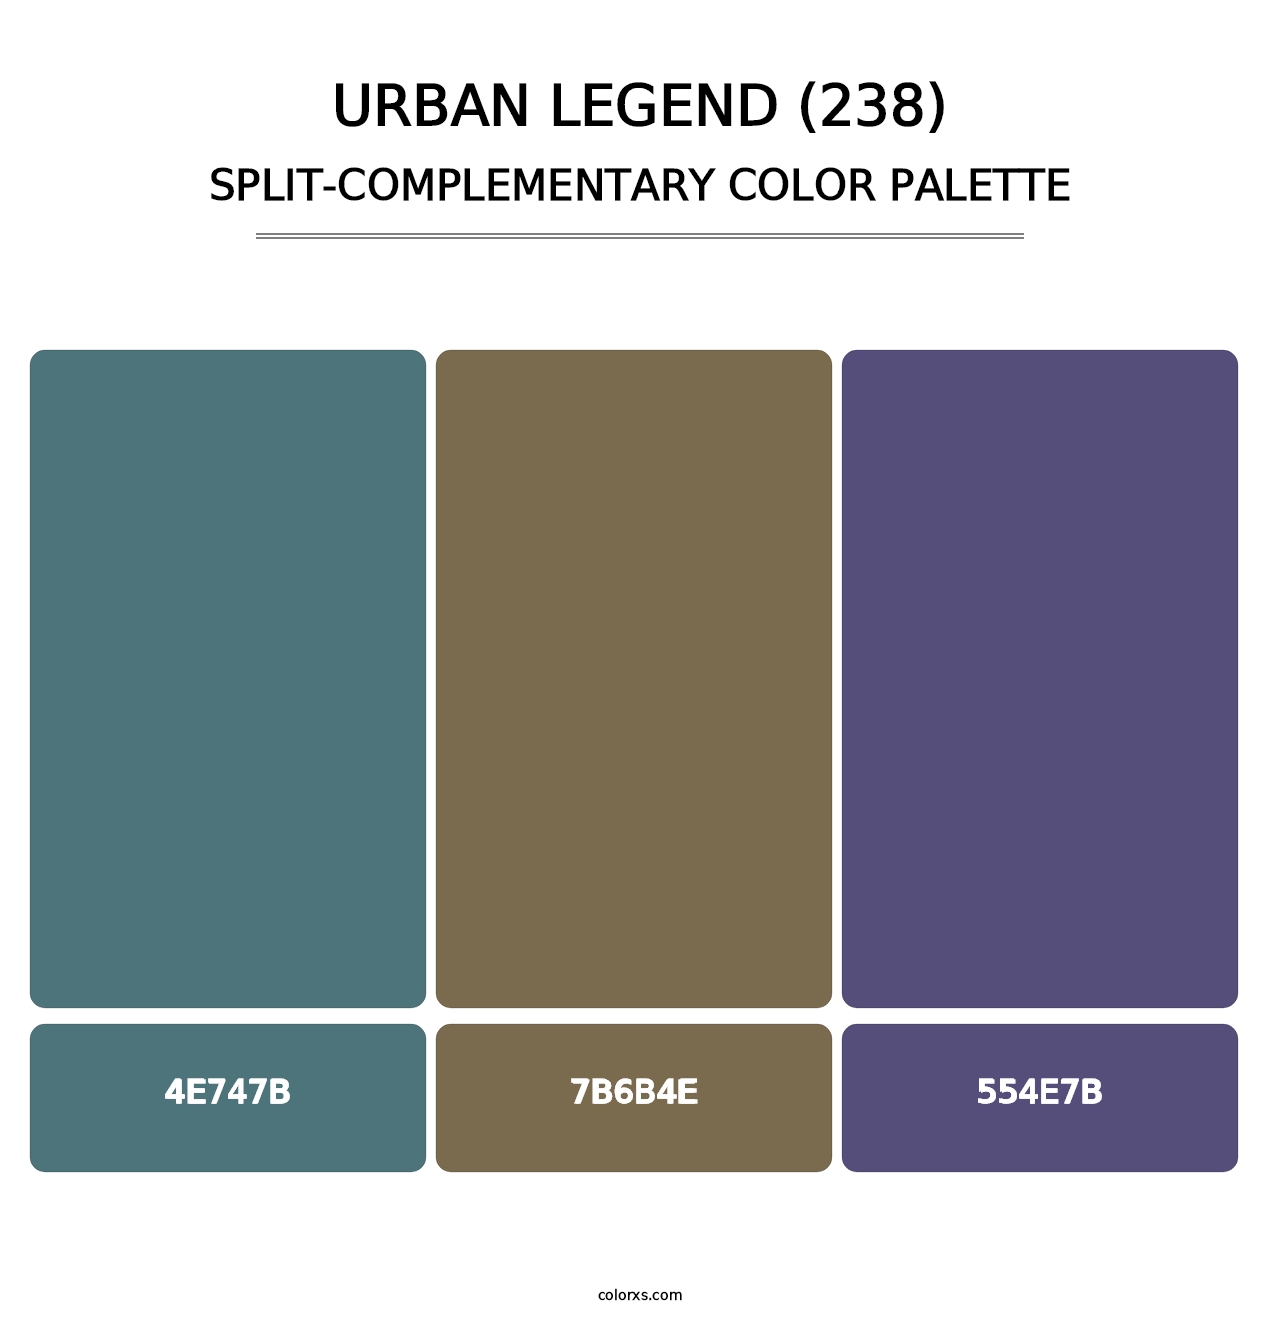 Urban Legend (238) - Split-Complementary Color Palette